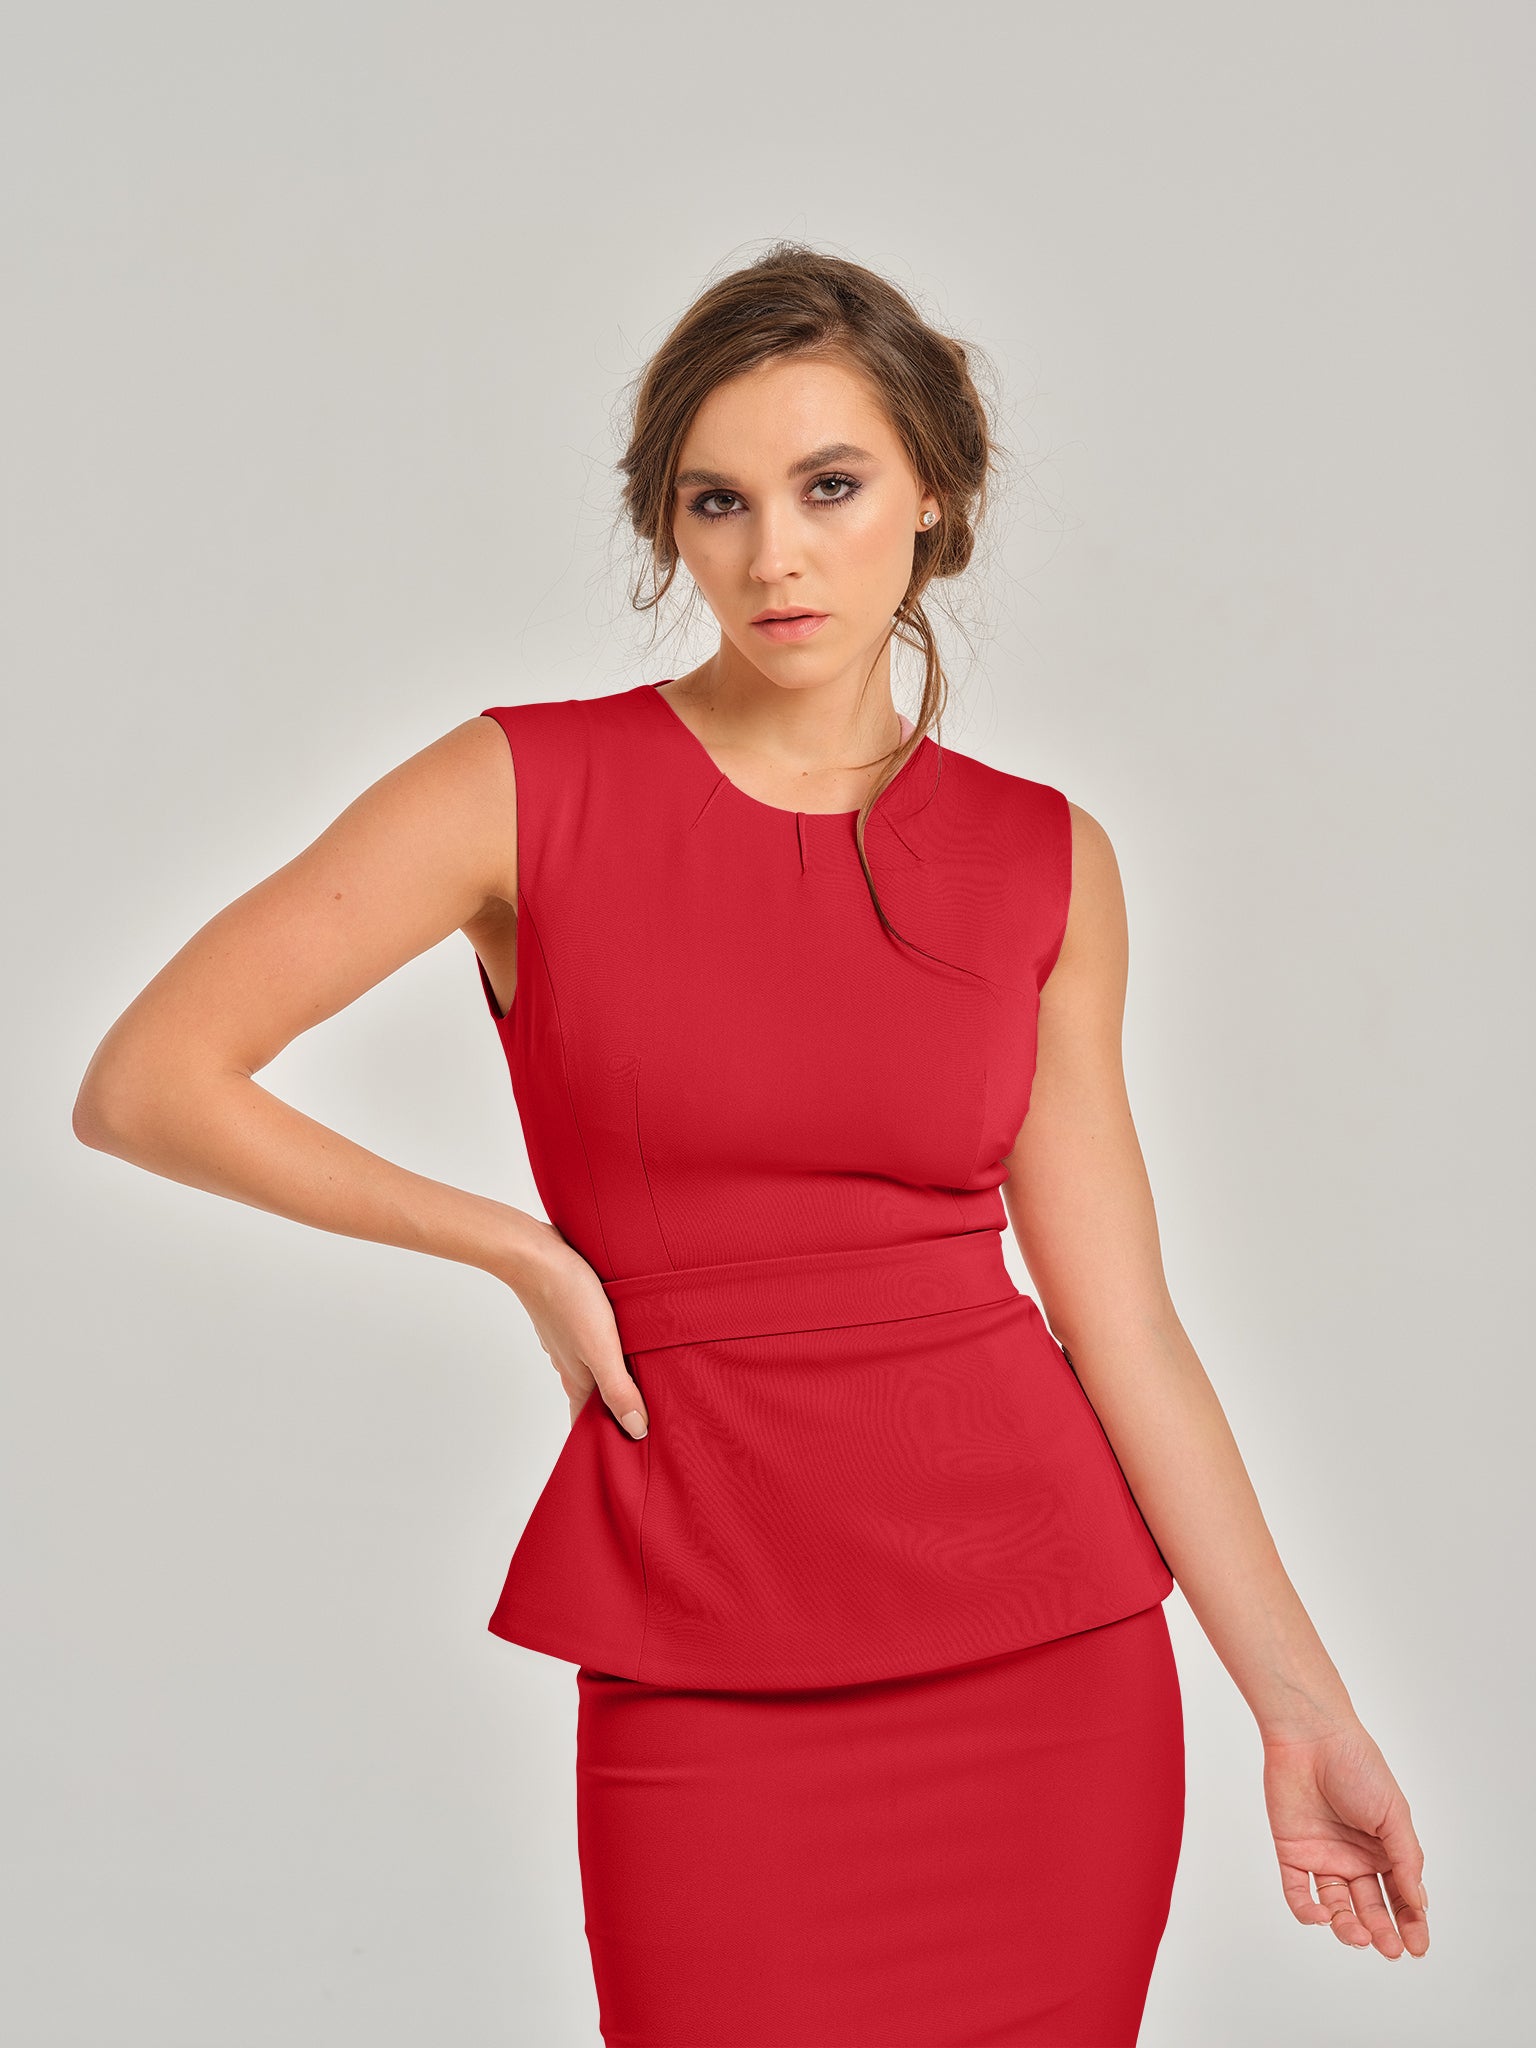 Fierce Red Sleeveless Waist-Fitted Top by Tia Dorraine Women's Luxury Fashion Designer Clothing Brand